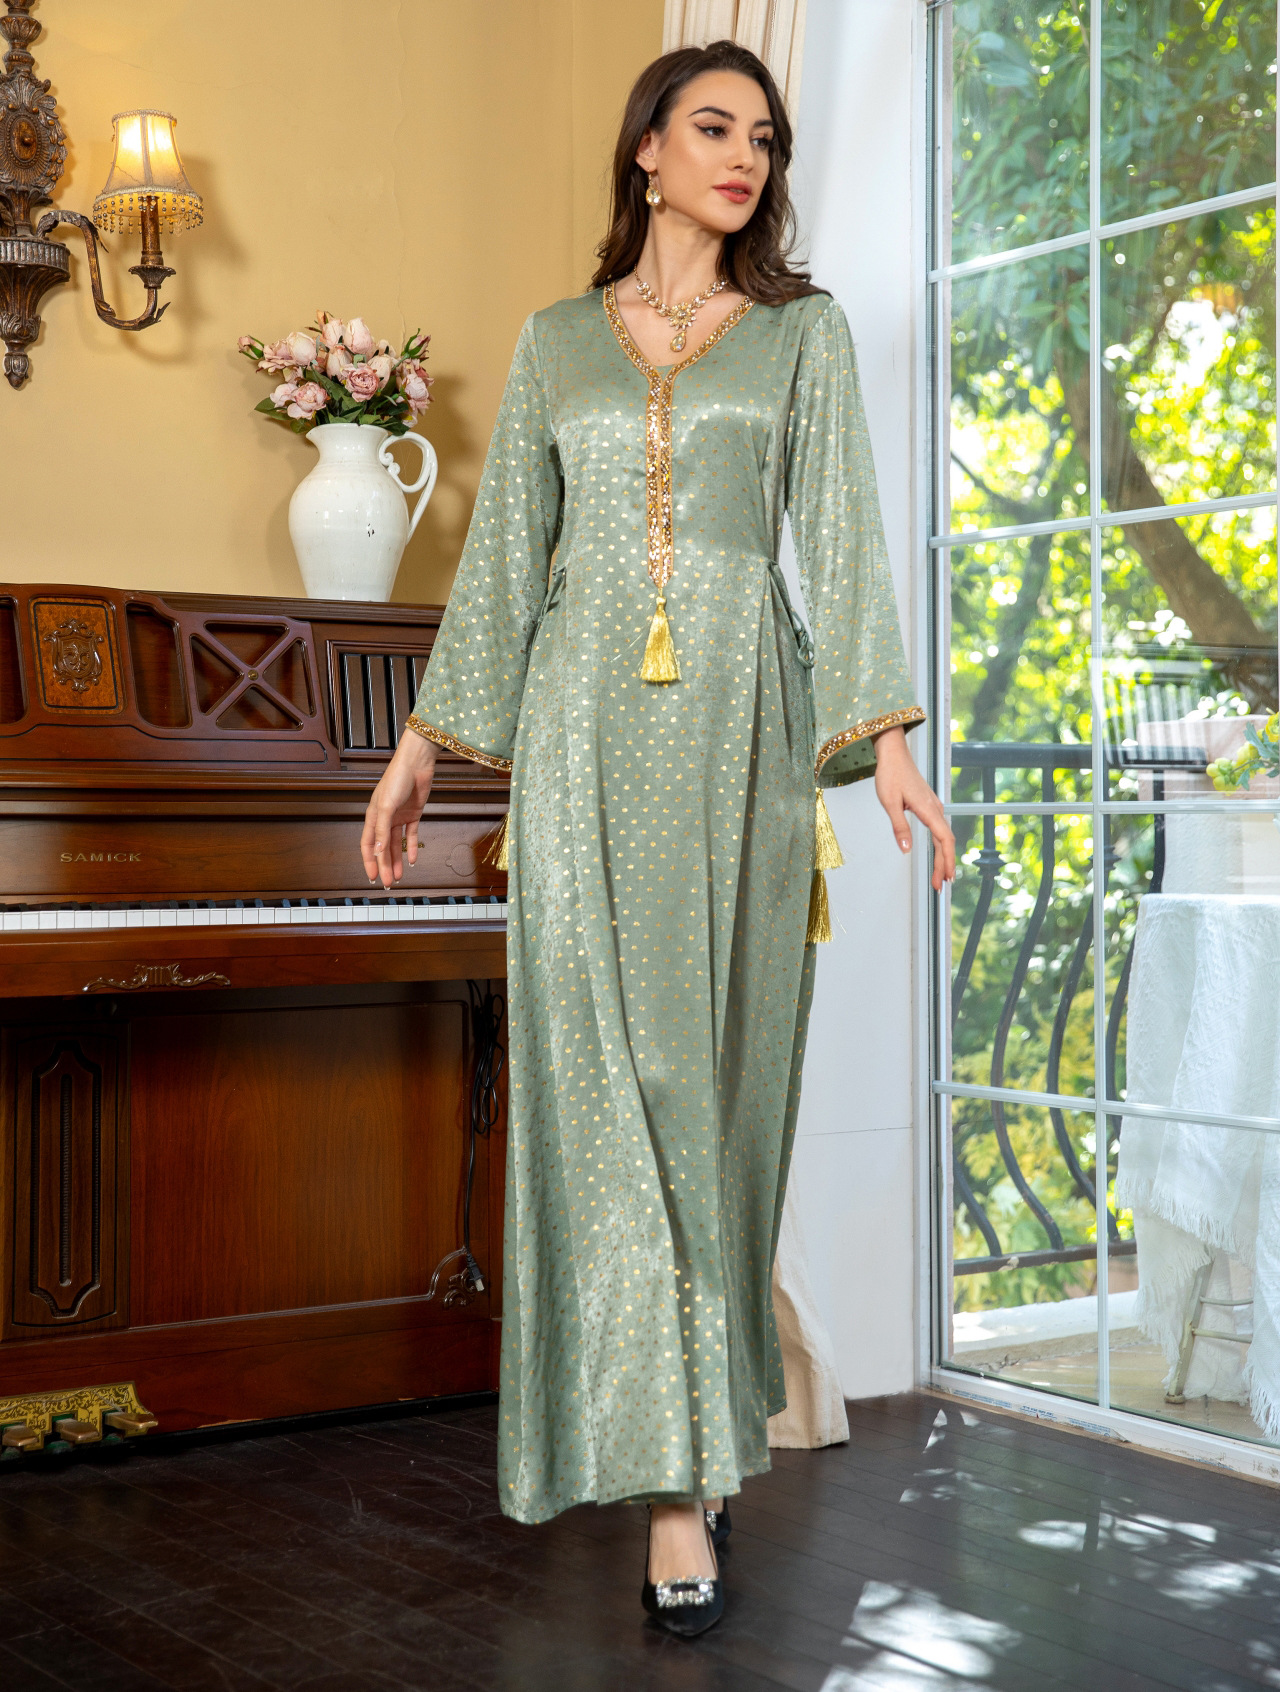 Muslim Middle East Fashion Ethnic Women Dress Suede Bronzing Hot Diamond Elegant Evening Dresses with waist Belt Dubai Arabic Clothing